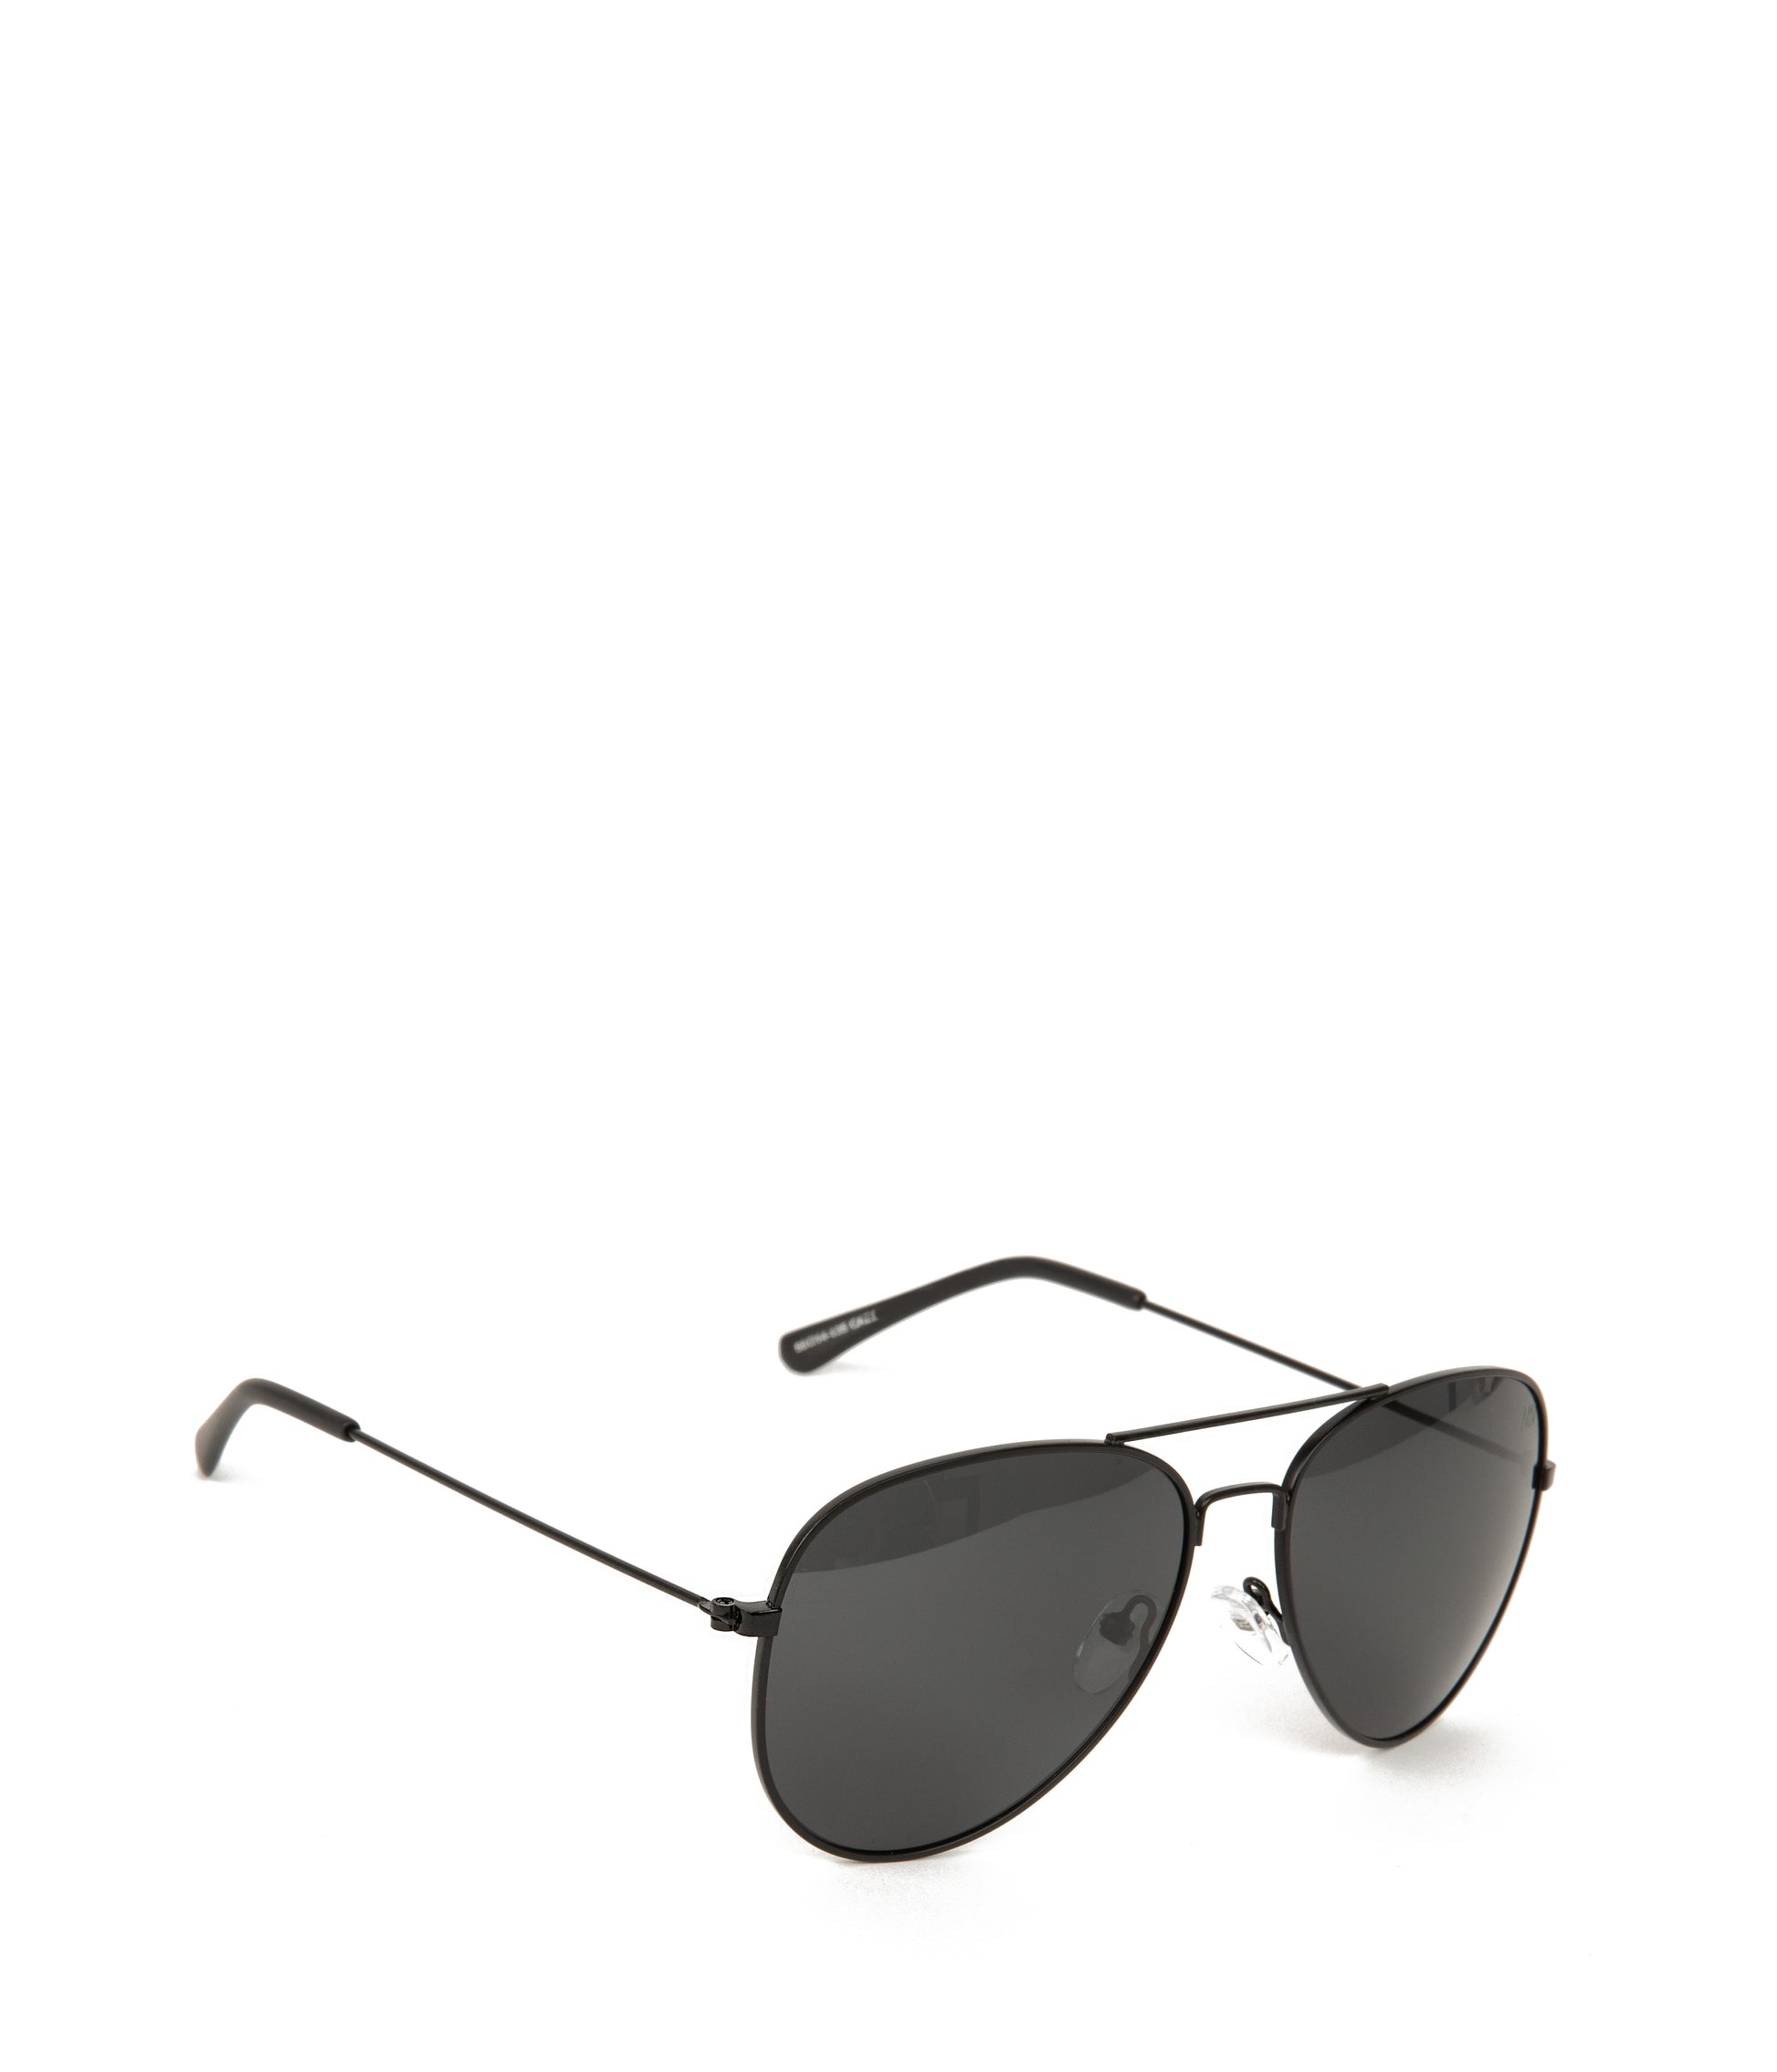 SADIE Metal Aviator Sunglasses | Color: Black, Grey - variant::black